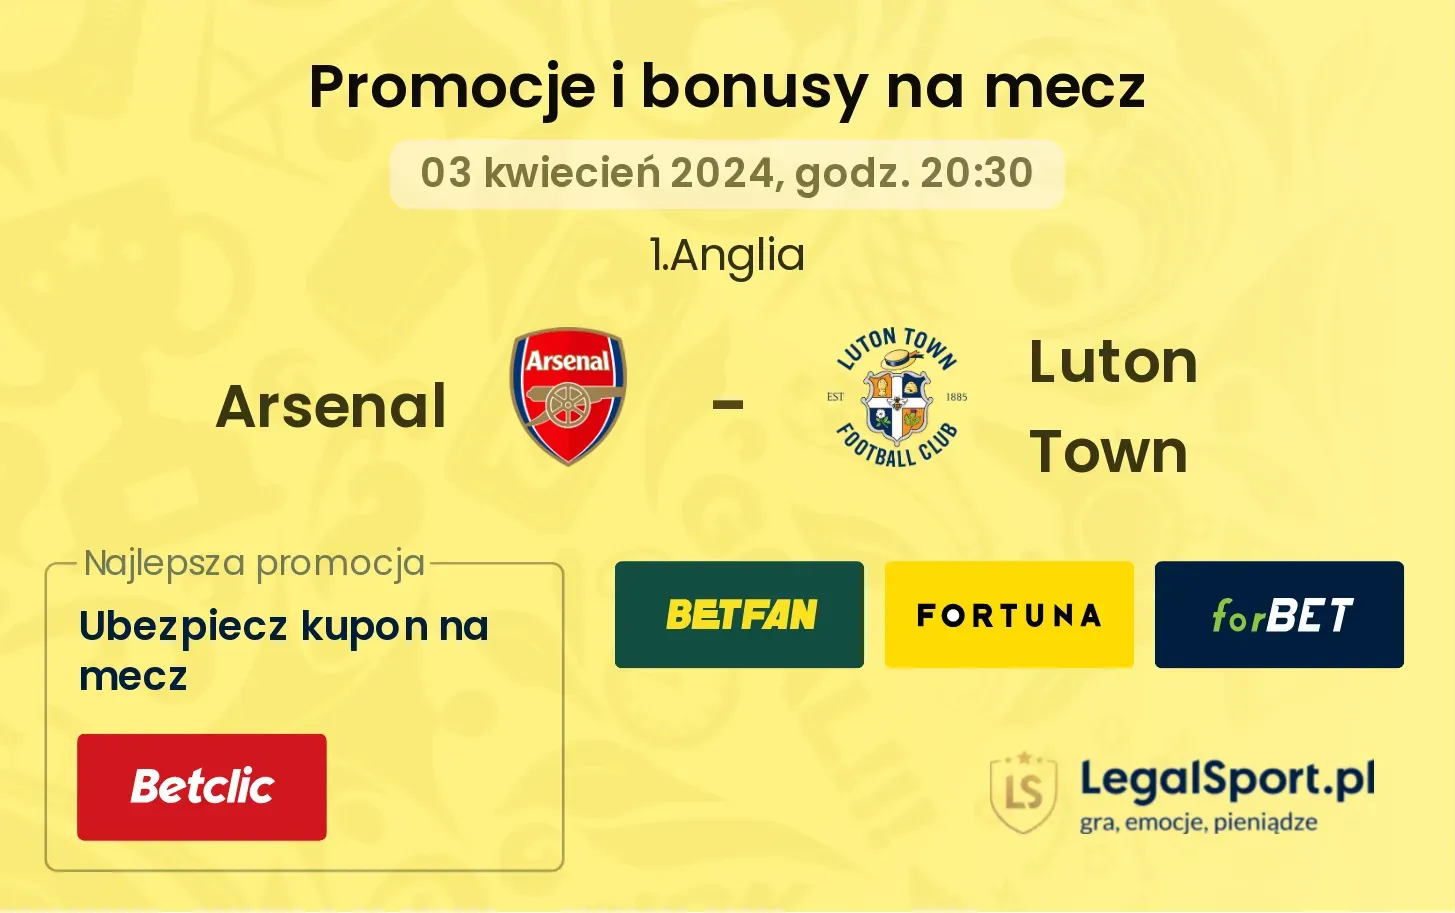 Arsenal - Luton Town promocje bonusy na mecz